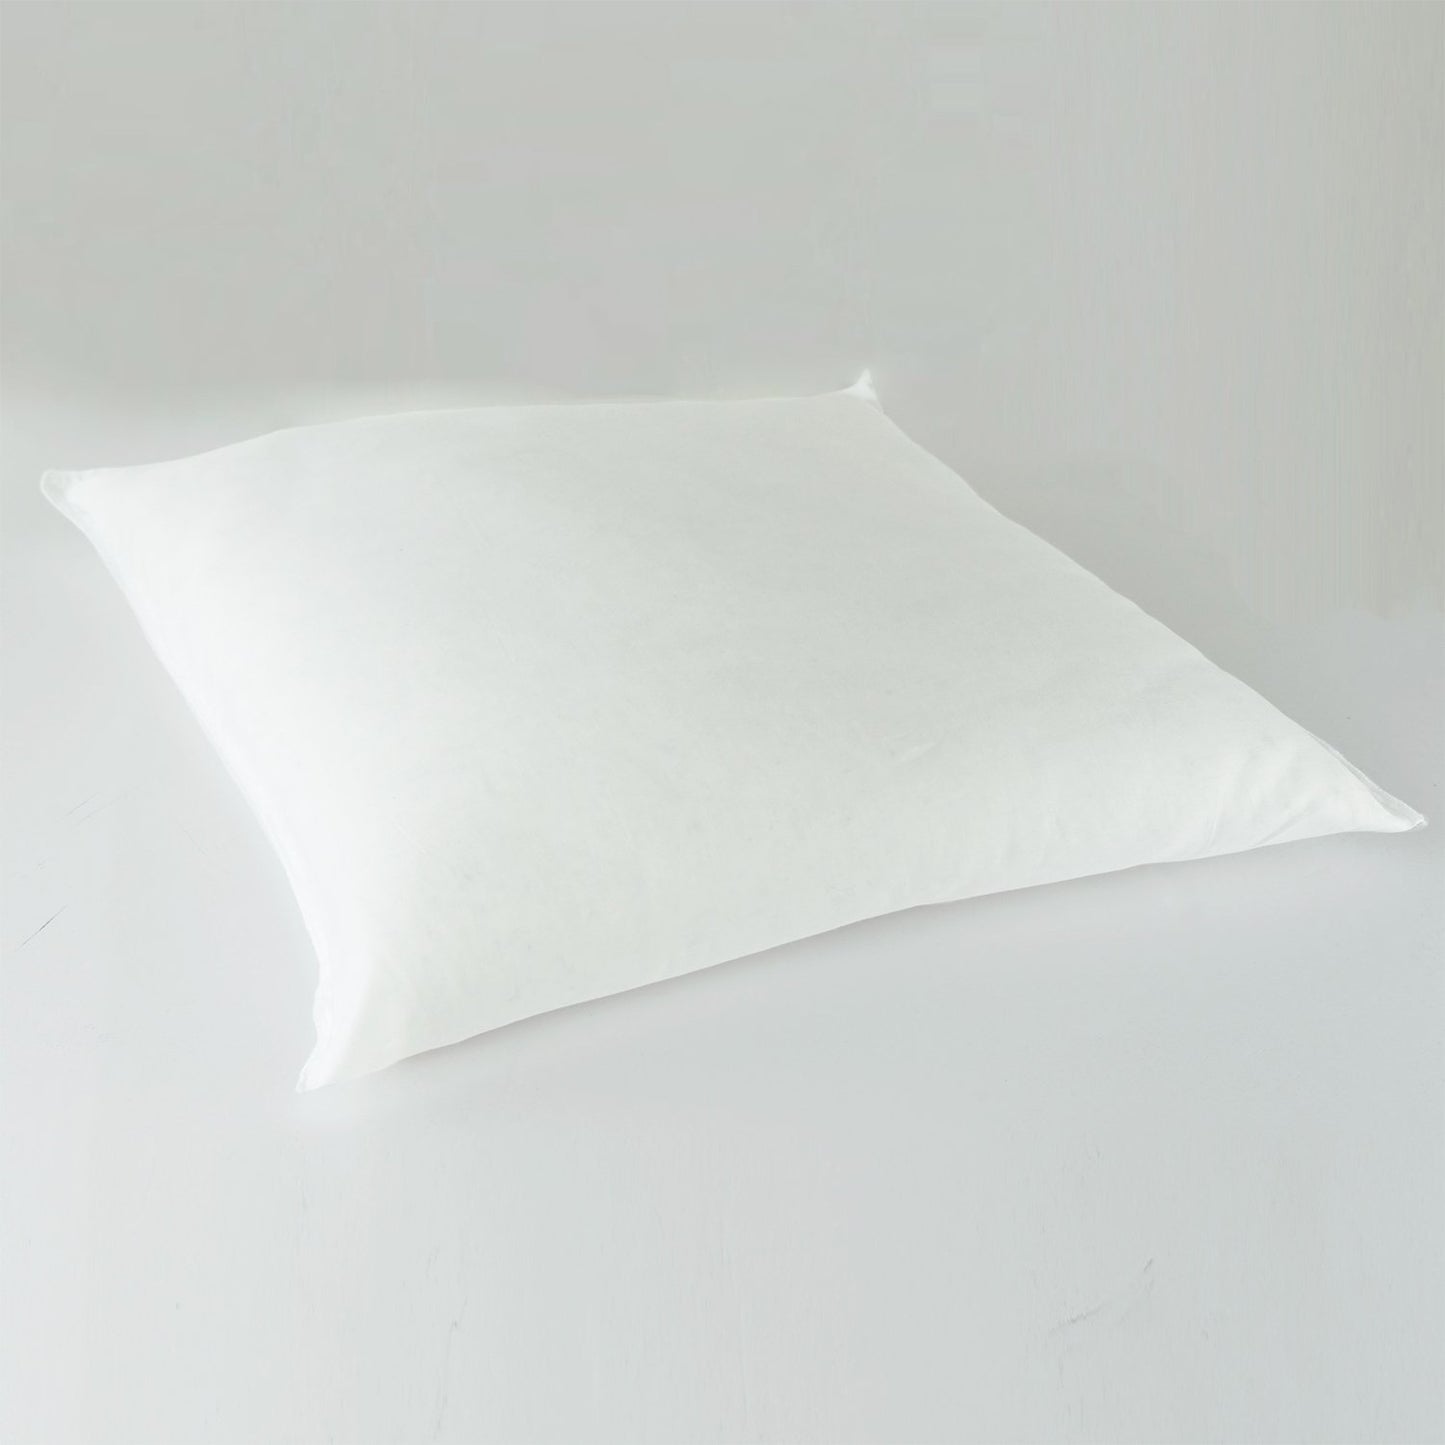 J-Life Usagi "Bunny" Red Zabuton Floor Pillow_Pillows & Shams_Zabuton Floor Pillows_100% Cotton_Reversible_Handmade